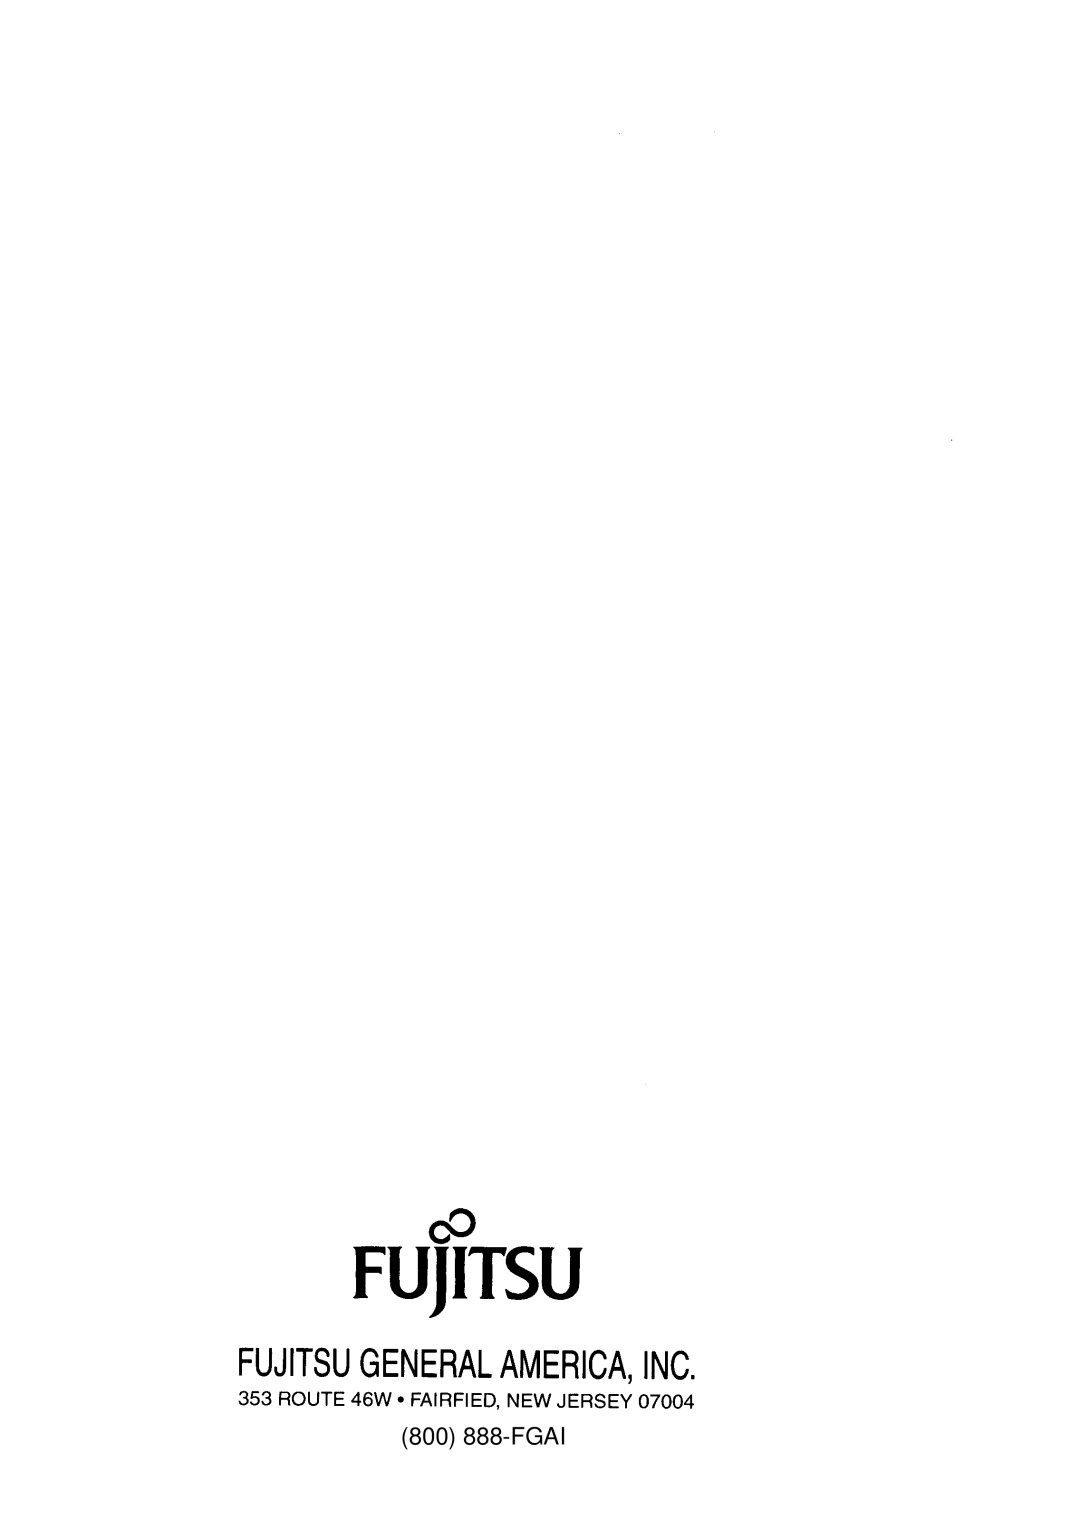 Fujitsu ASU12C1, ASU9C1, AOU9C1, AOU12C1, Cooling Model room air conditioner WALL MOUNTED TYPE manual 800 888-FGAI 